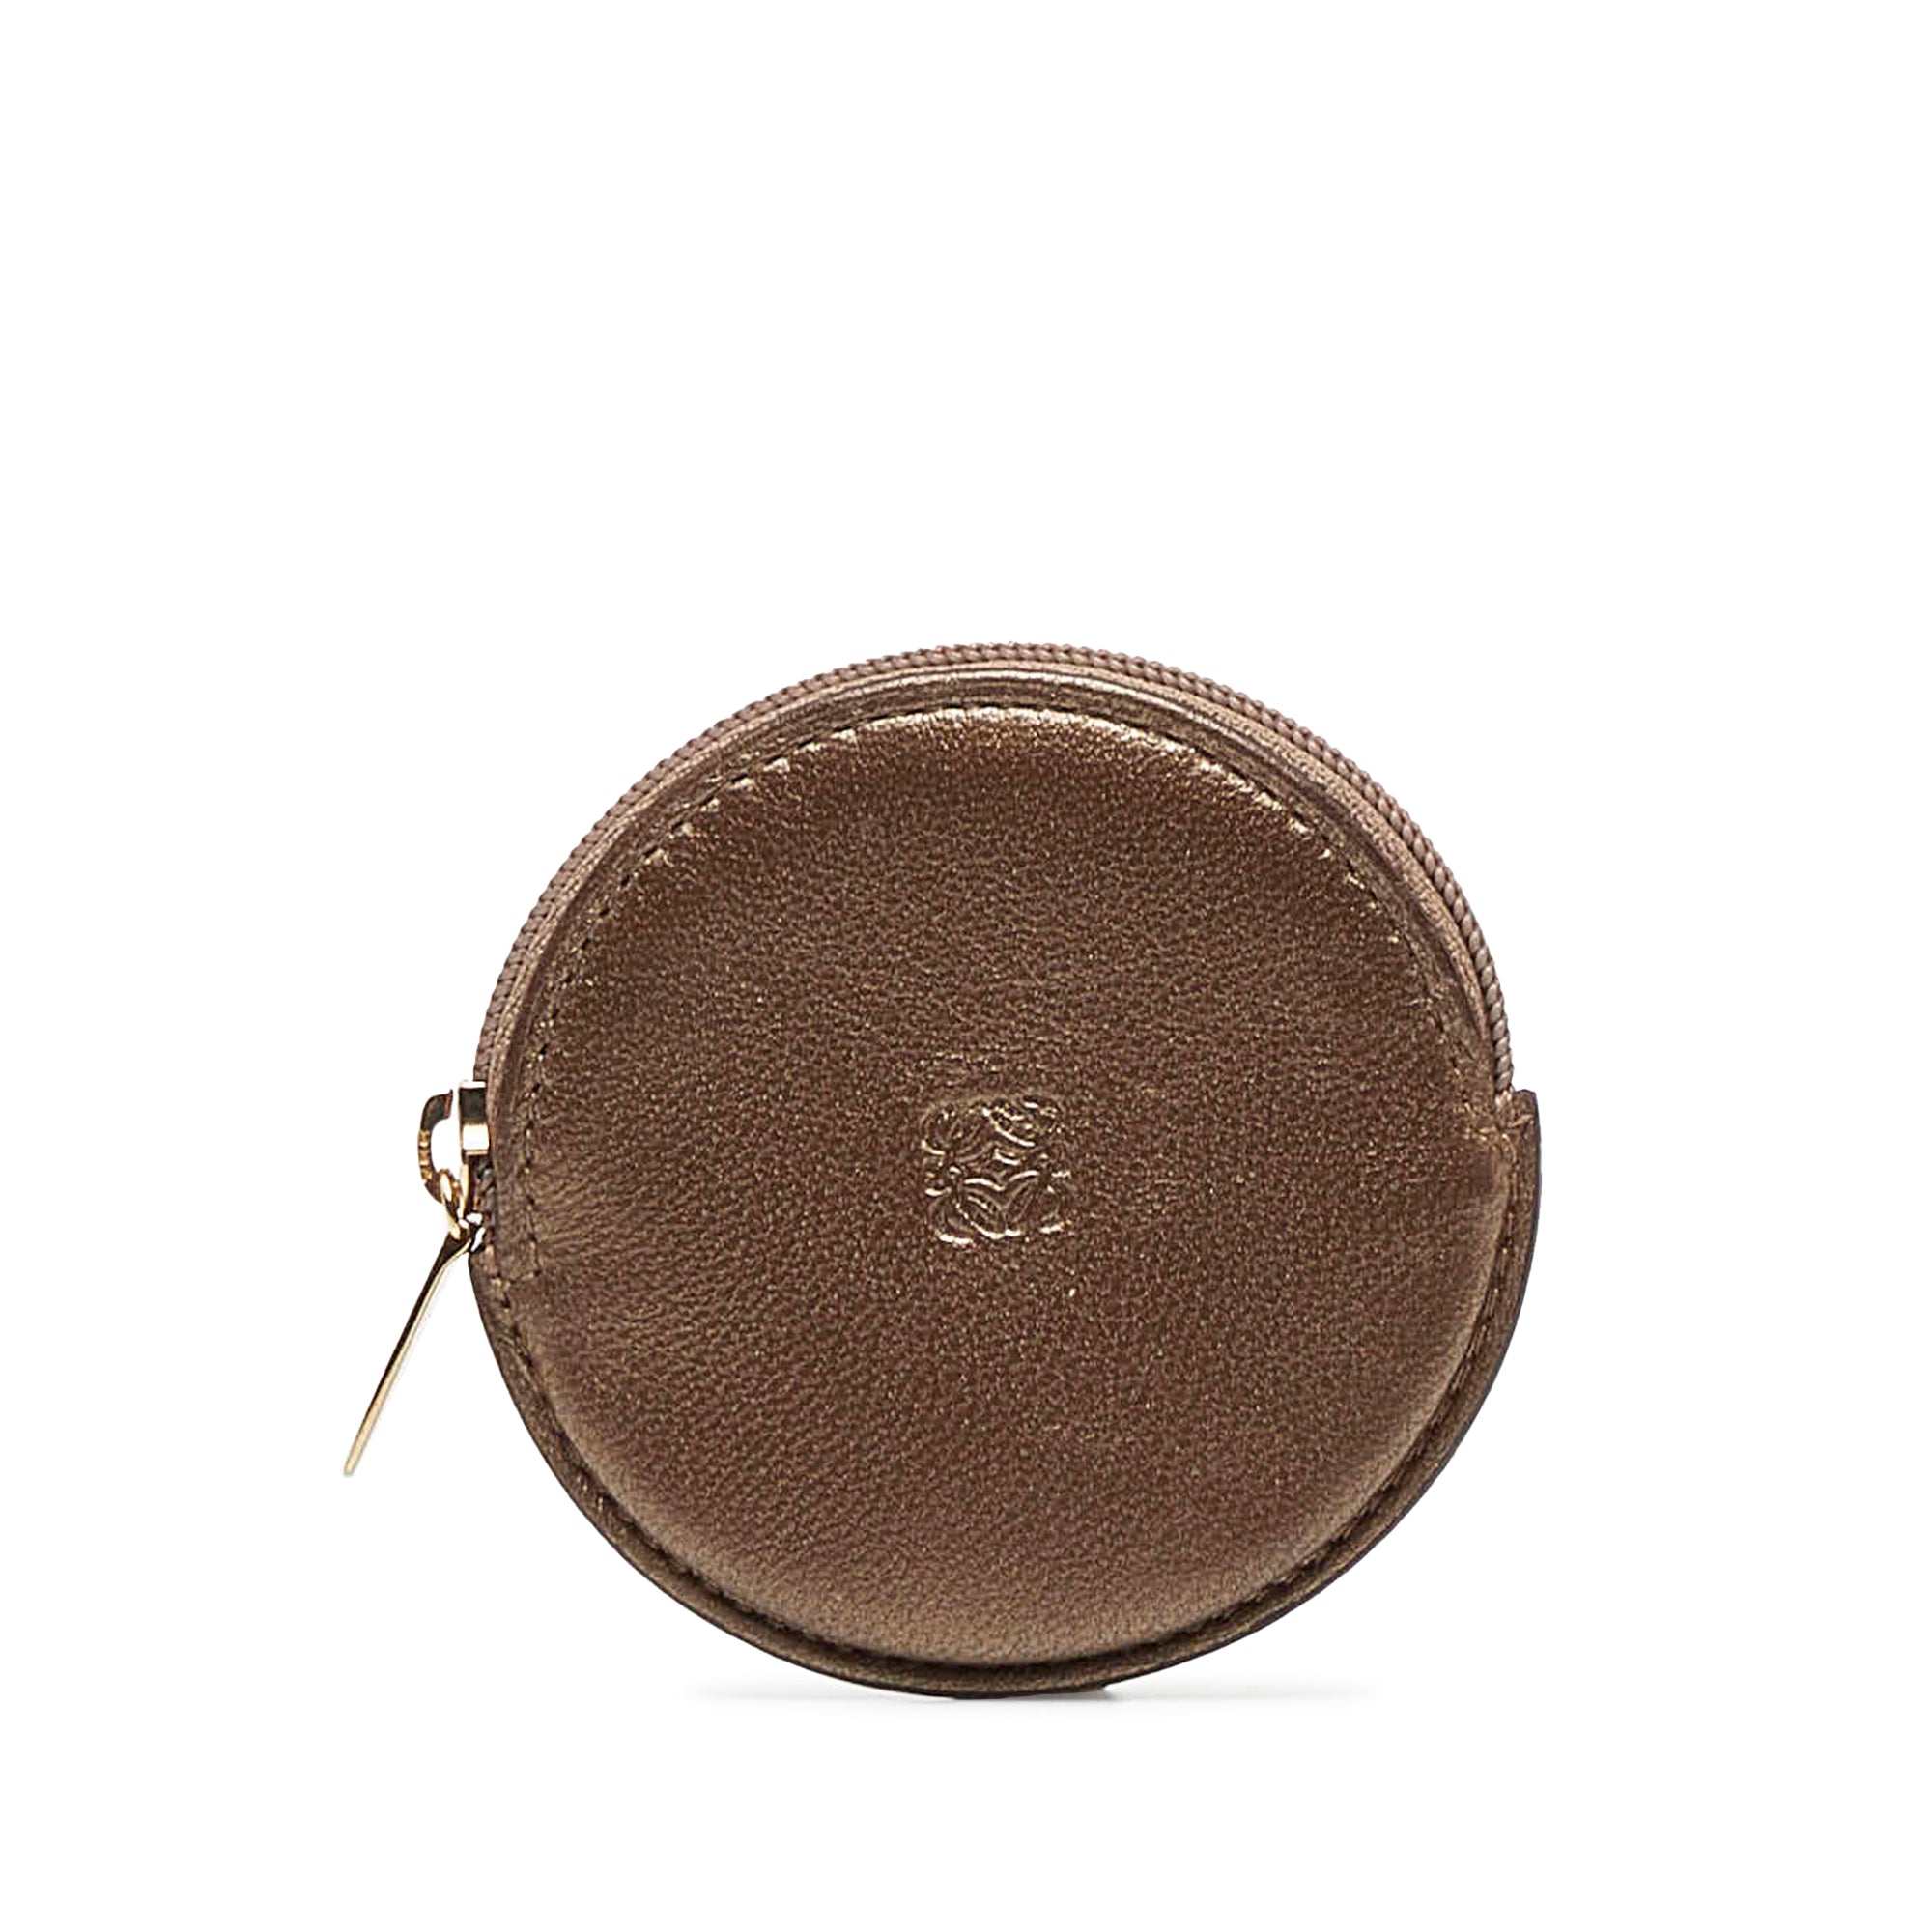 Round coin purse $260.00  Louis vuitton, Purses for sale, Coin purse